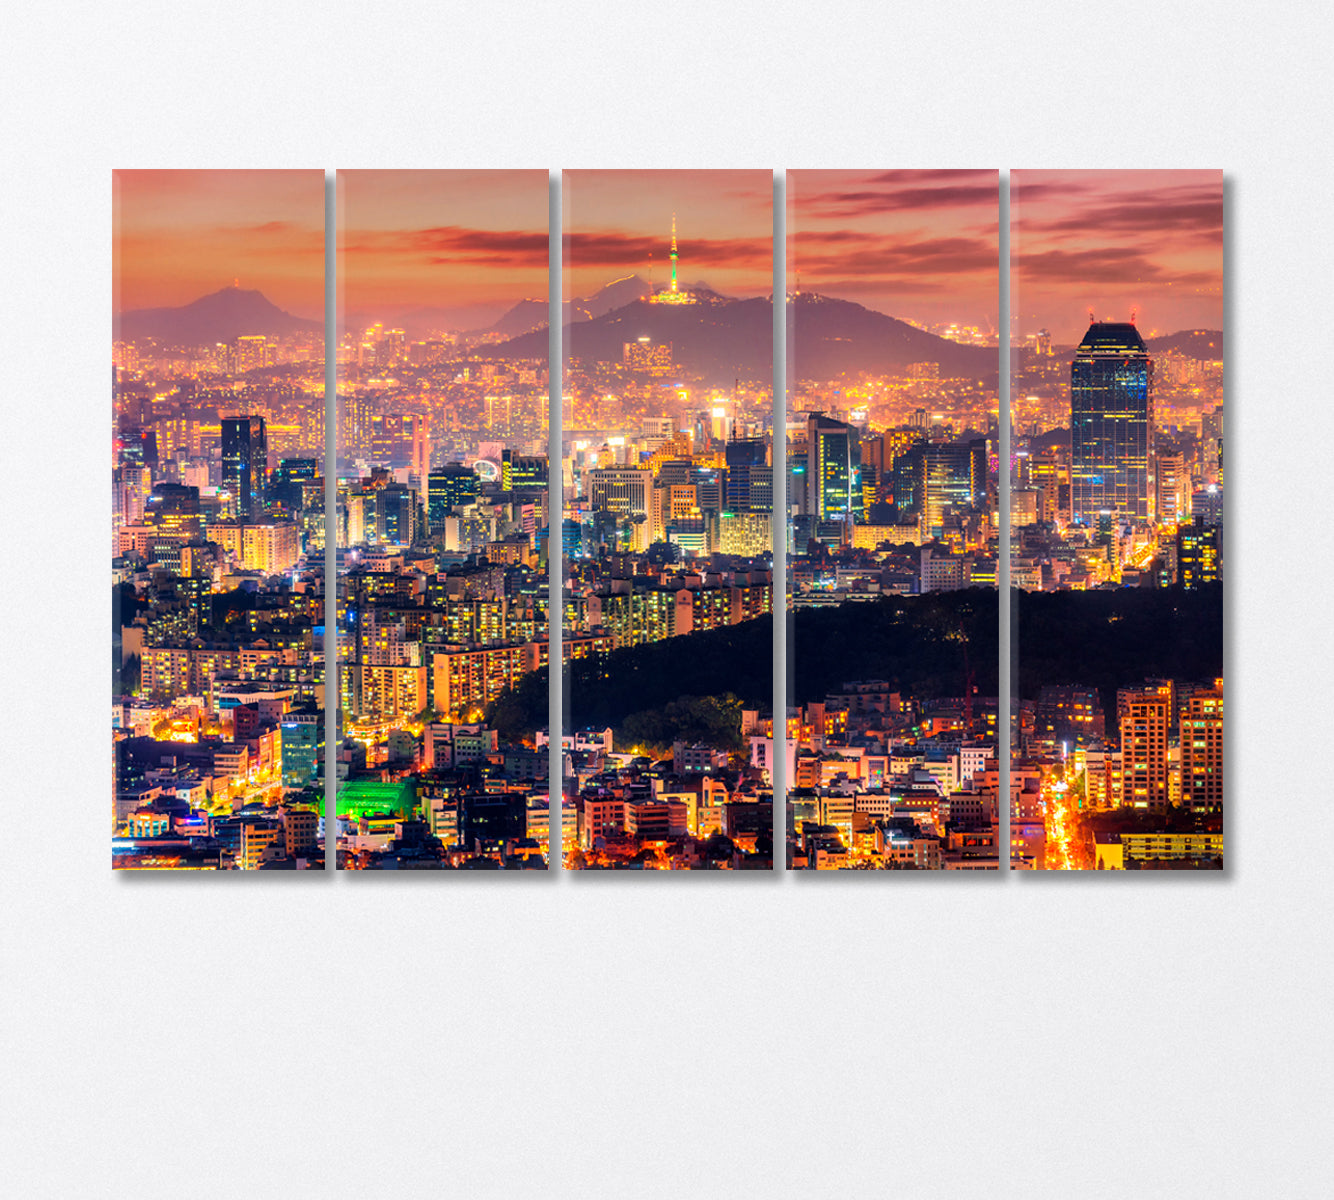 Seoul City Lights South Korea Canvas Print-Canvas Print-CetArt-5 Panels-36x24 inches-CetArt